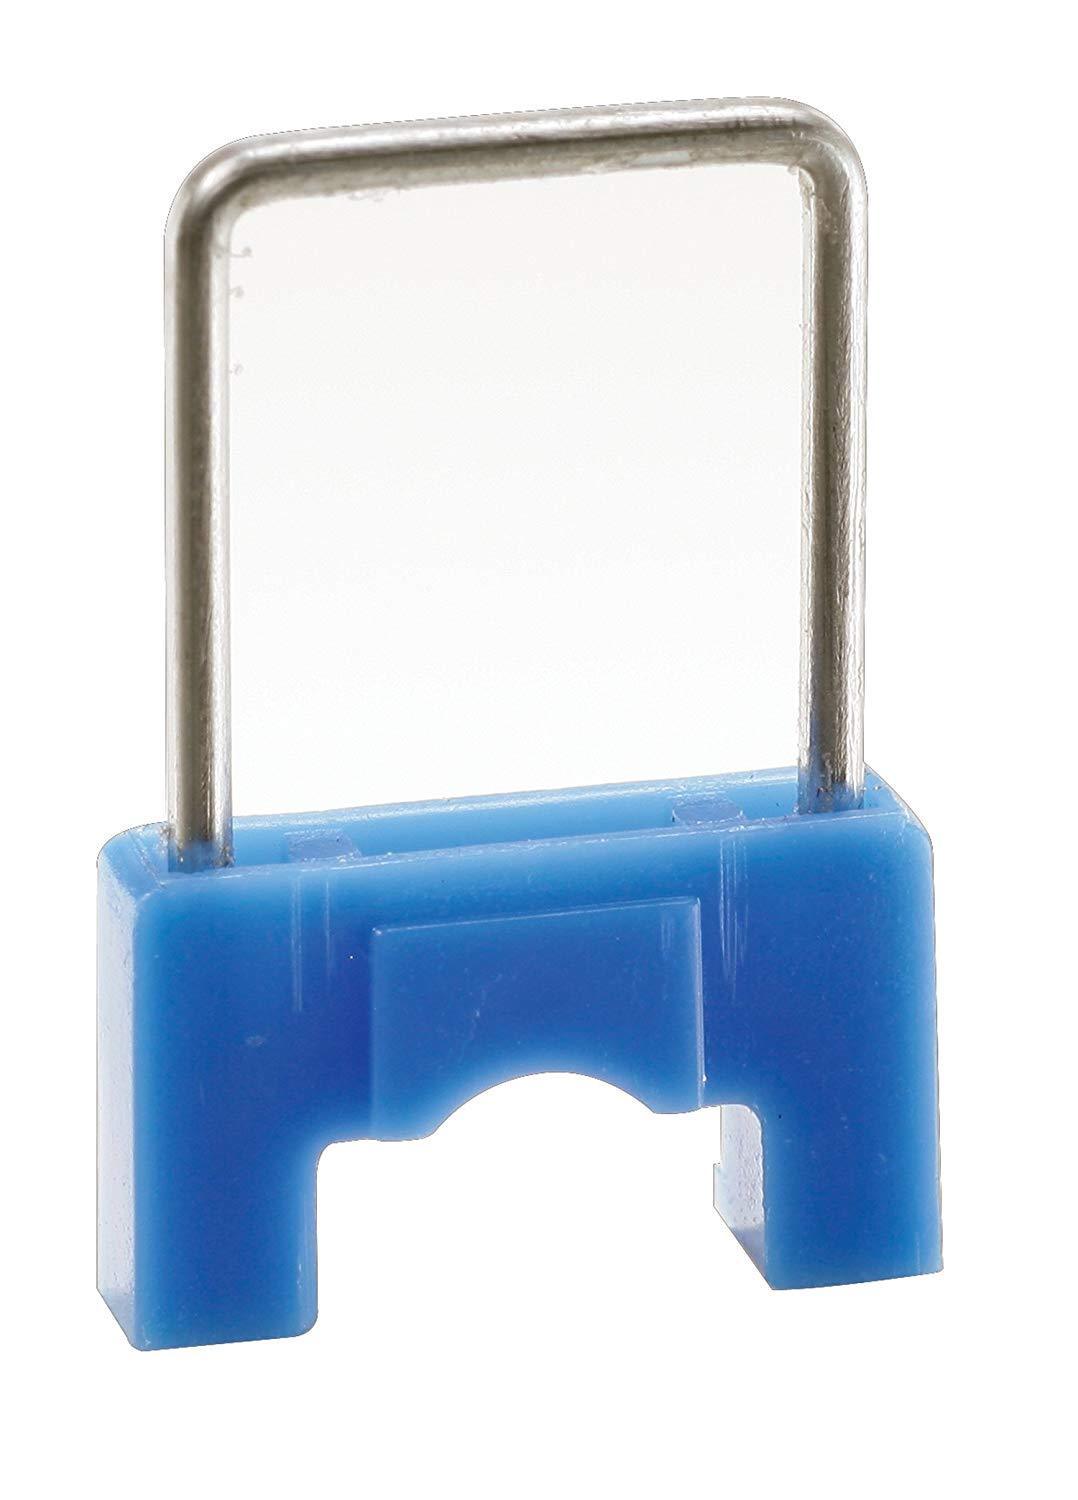 Gardner Bender Cable Boss MPS-2080 5/16" Insulated Blue Staples (5 Packs of 250)